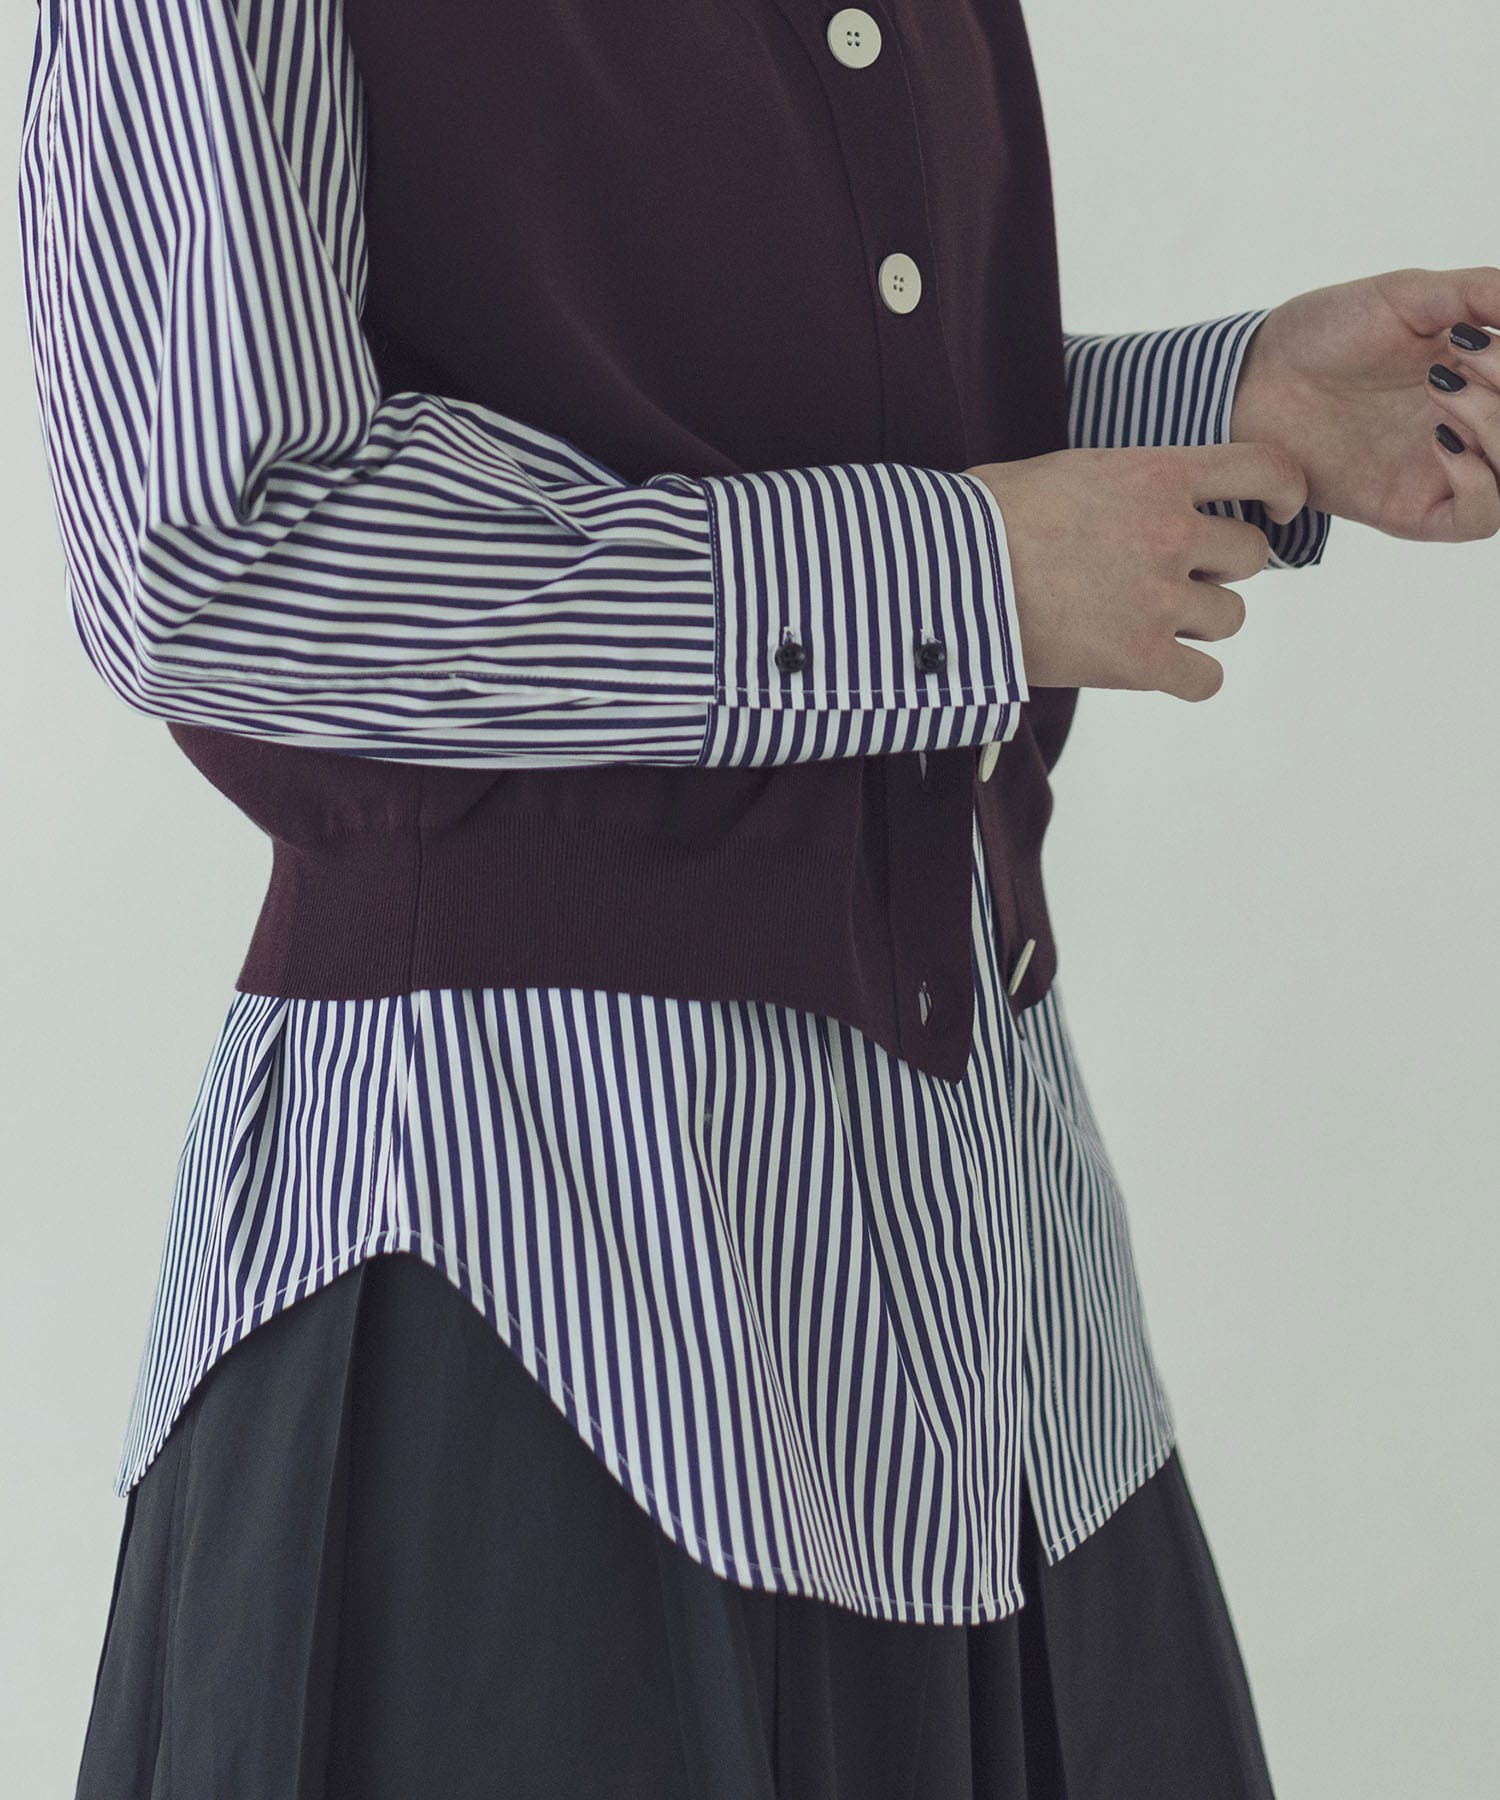 cotton stripe clean shirt